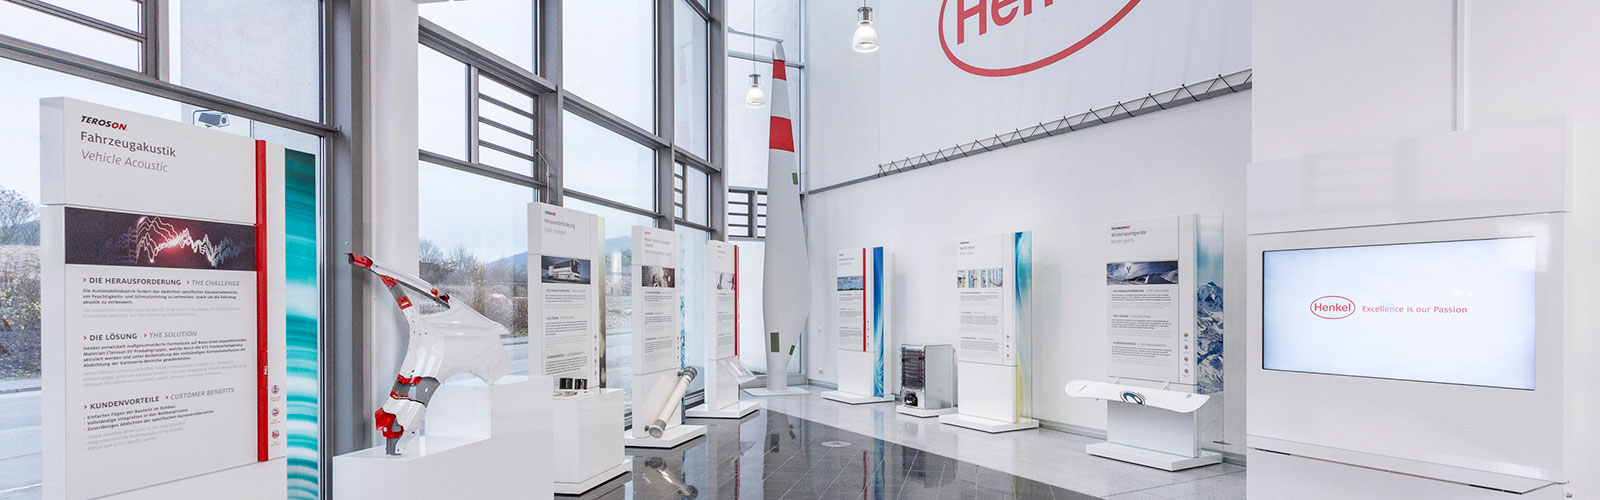 Braunwagner Communication Design Henkel Adhesives Customer Journey 2016